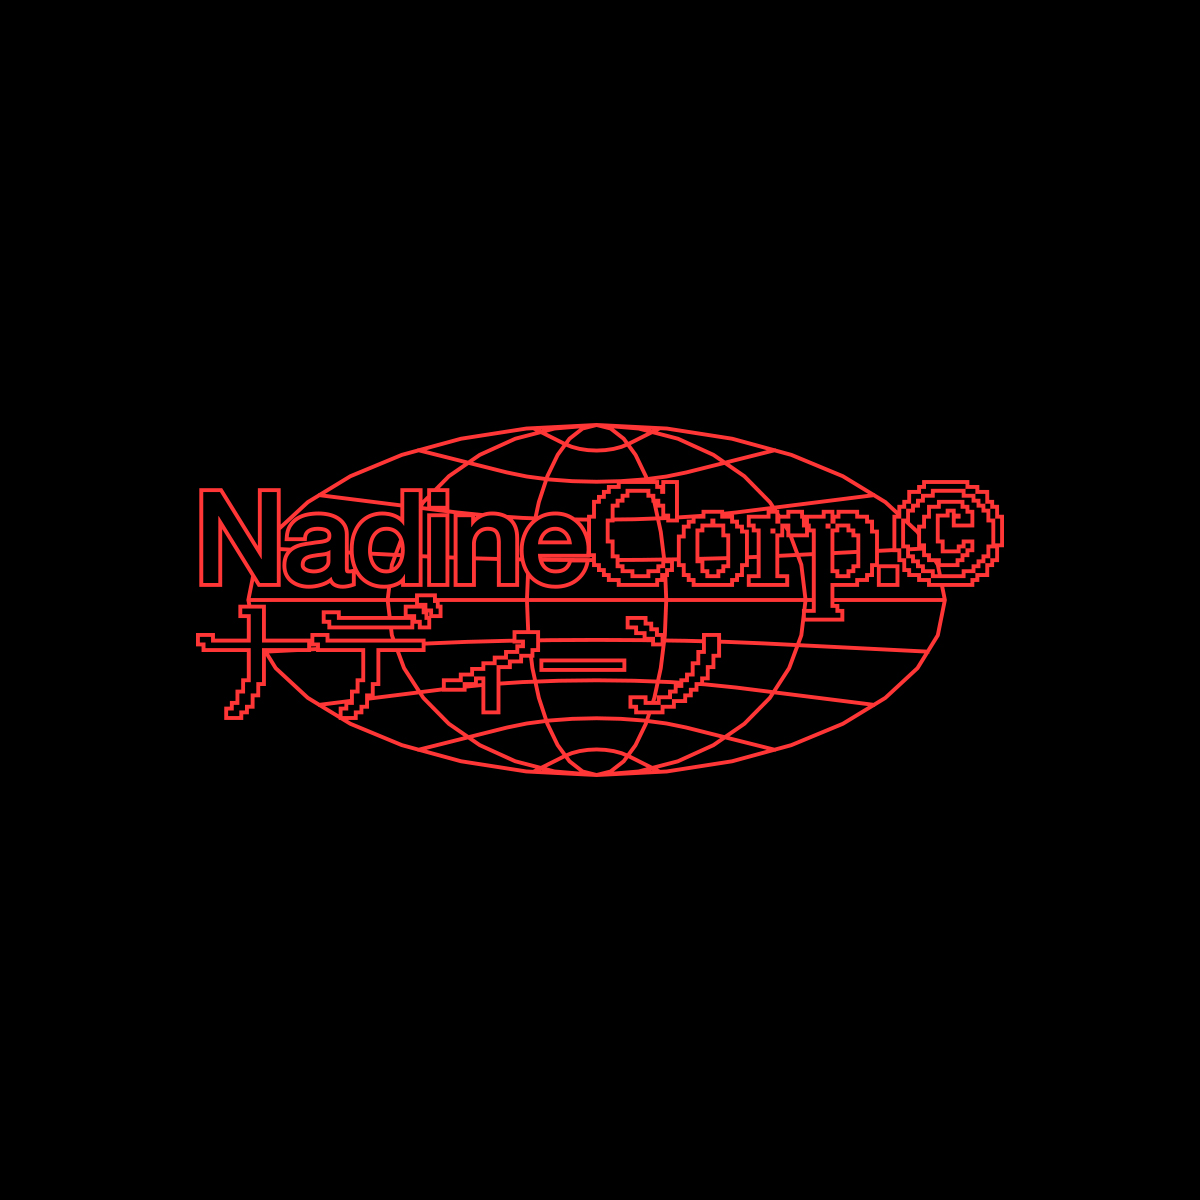 Image for NadineCorp©